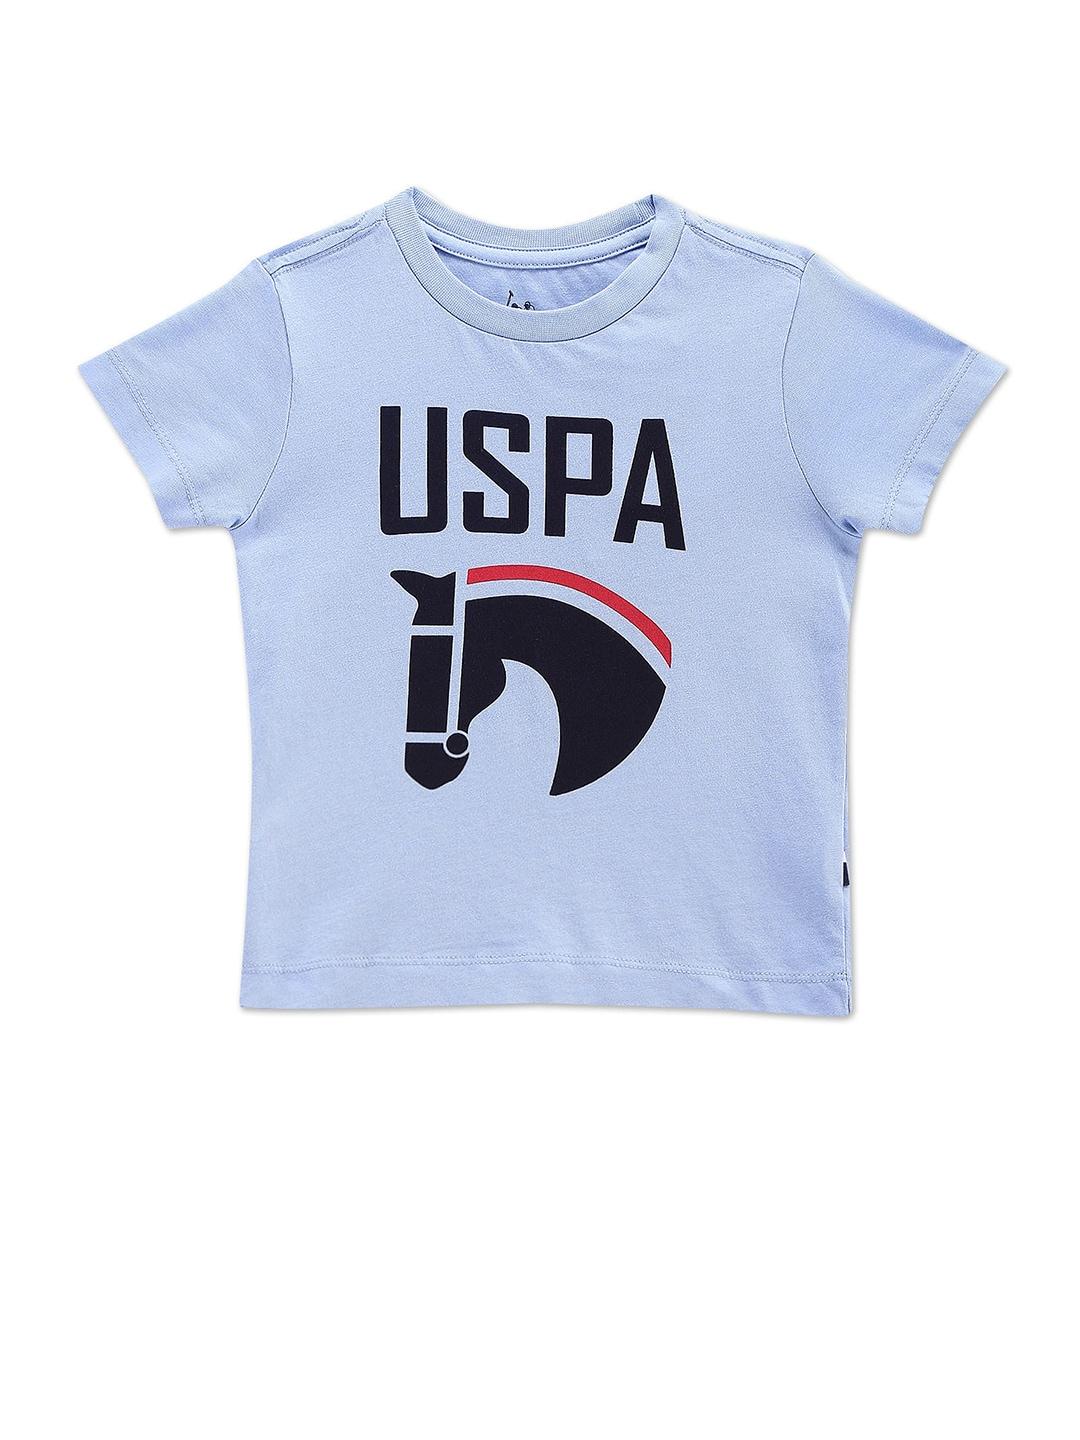 U.S. Polo Assn. Kids Boys Blue Typography Printed T-shirt